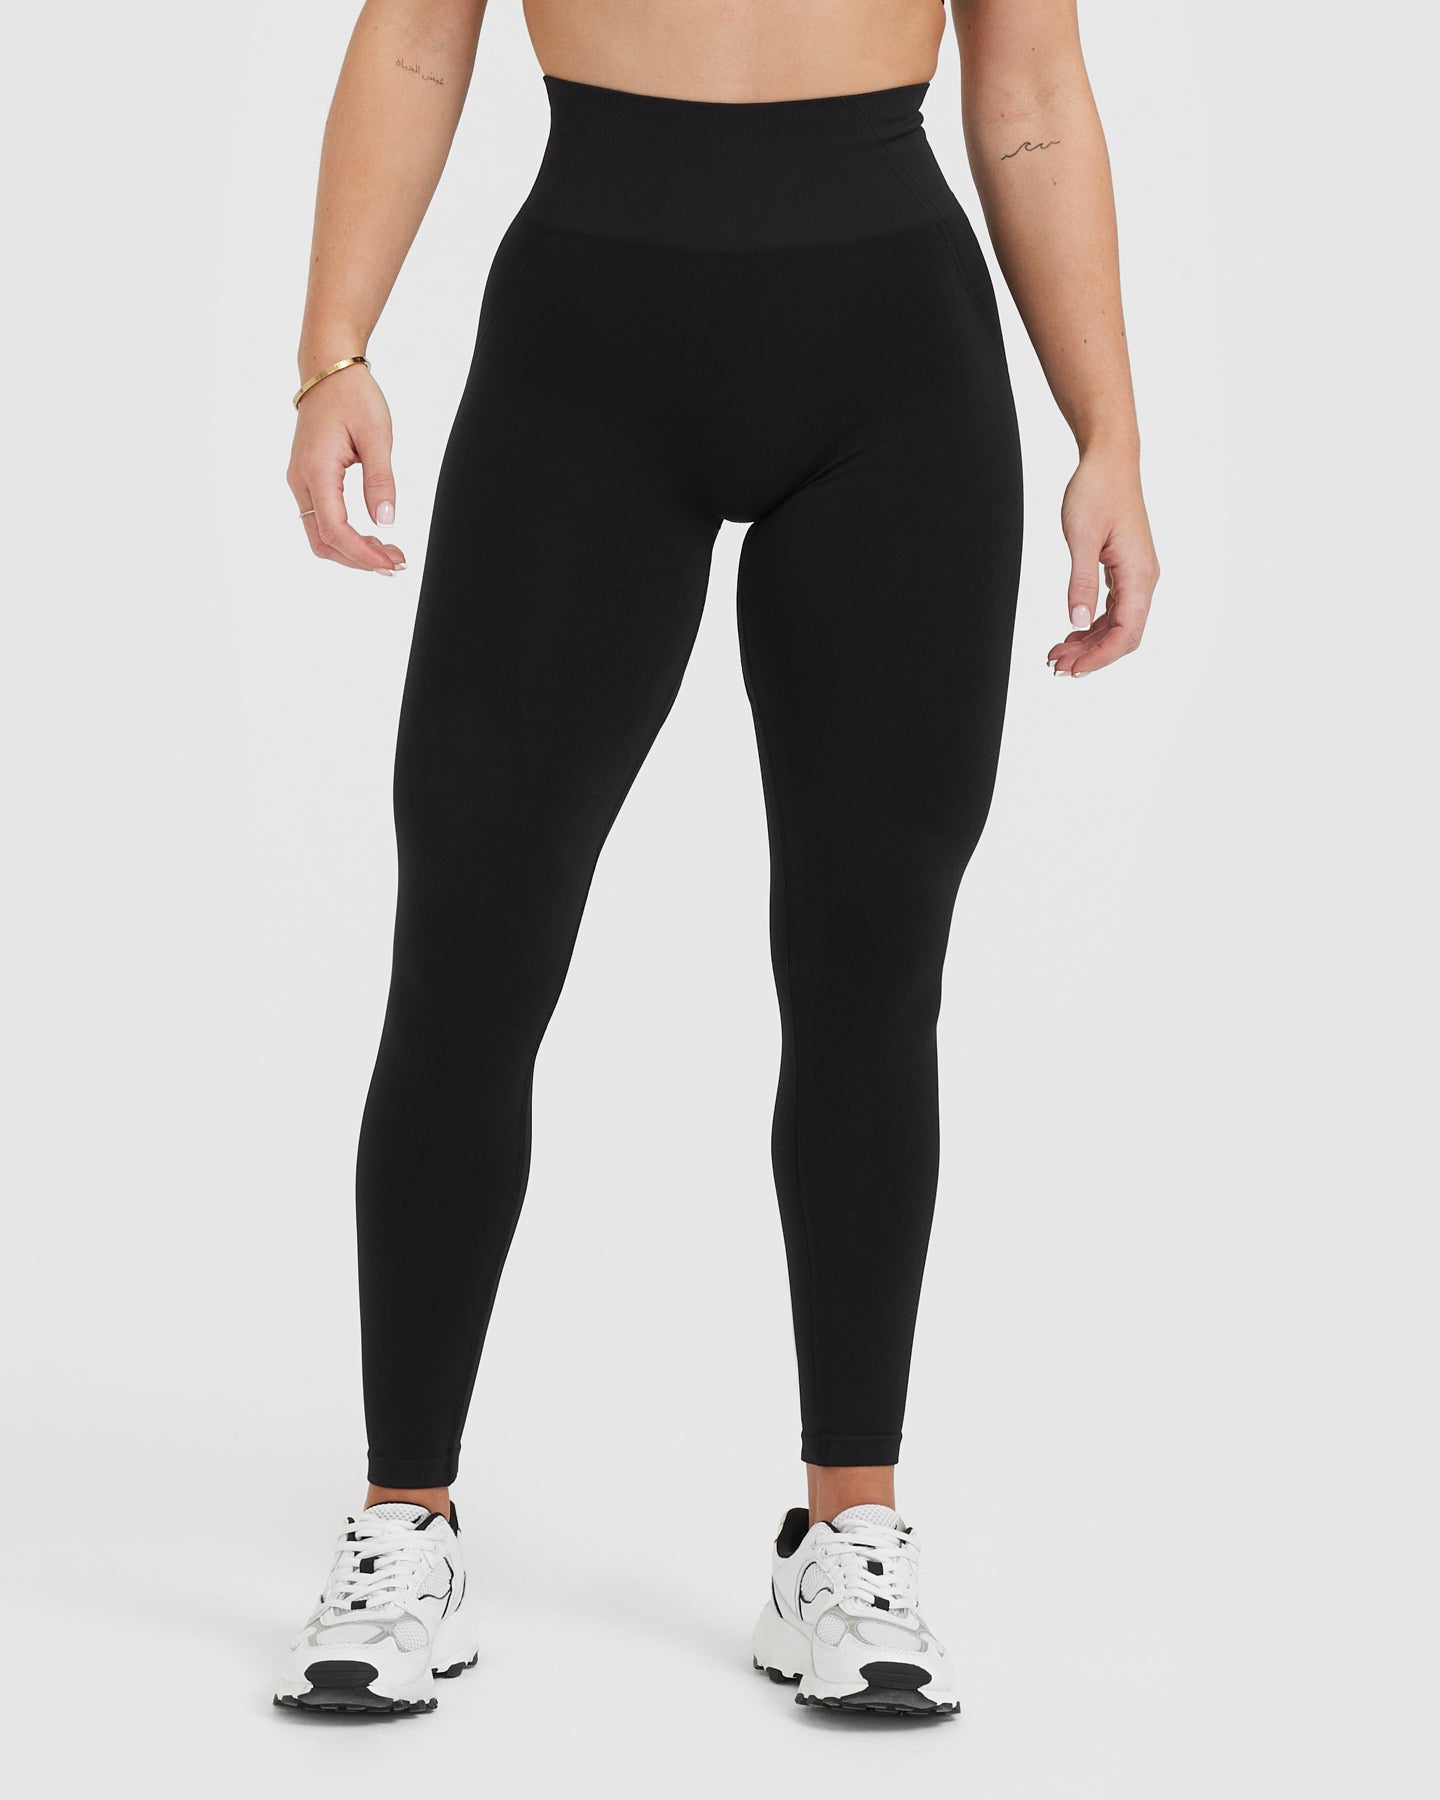 Nike Yoga leggings in black